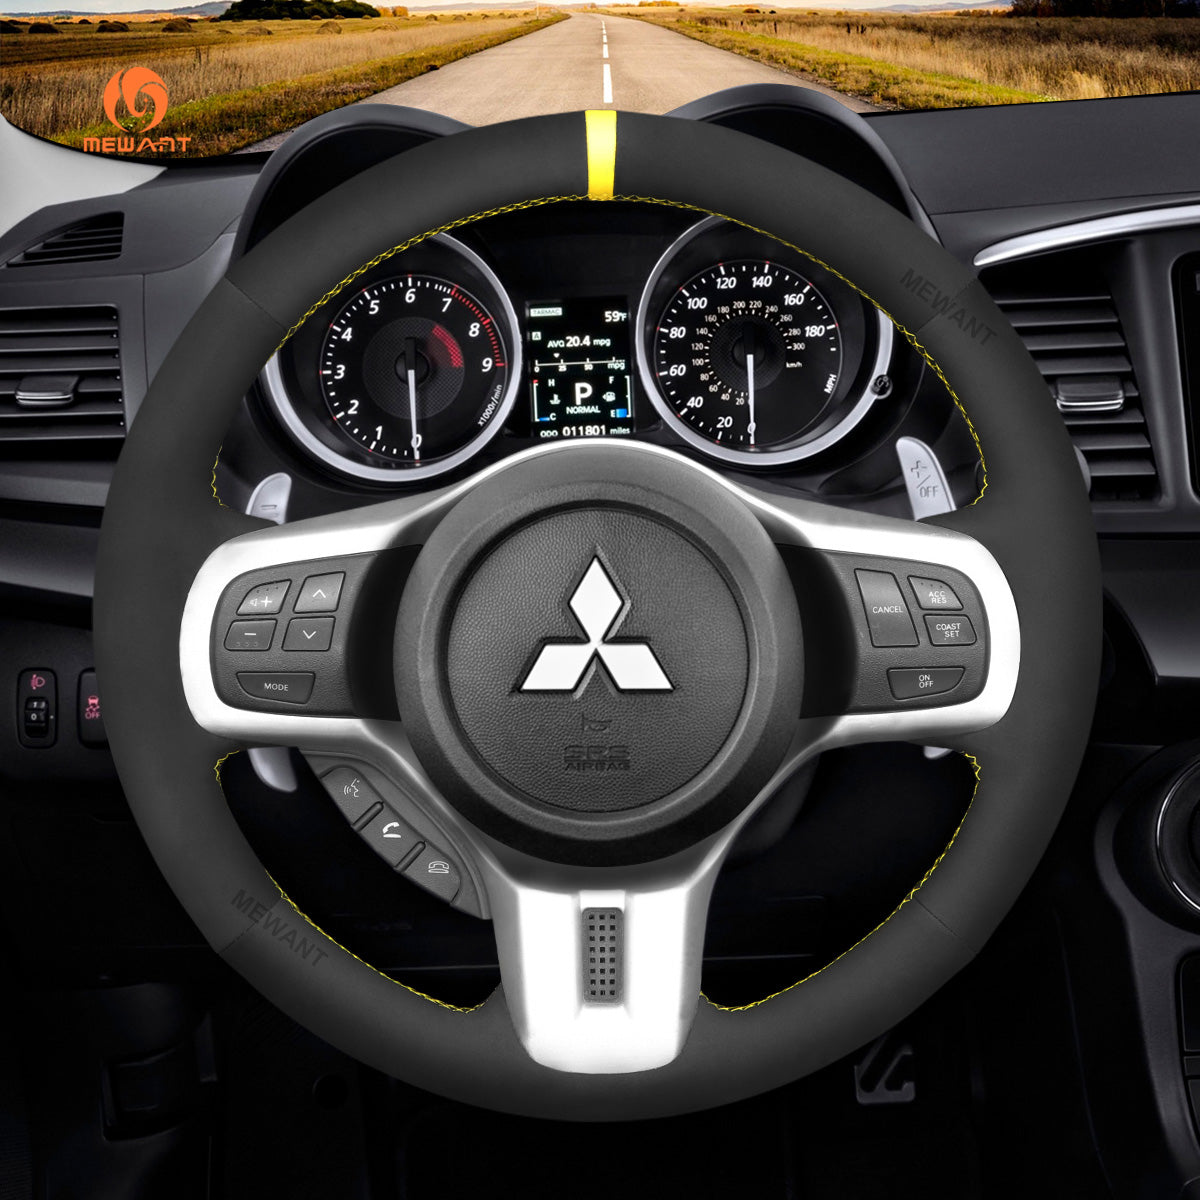  MEWANT DIY Carbon Fiber Alcantara Car Steering Wheel Cover for Mitsubishi Lancer Evolution EVO X 10 2008-2015